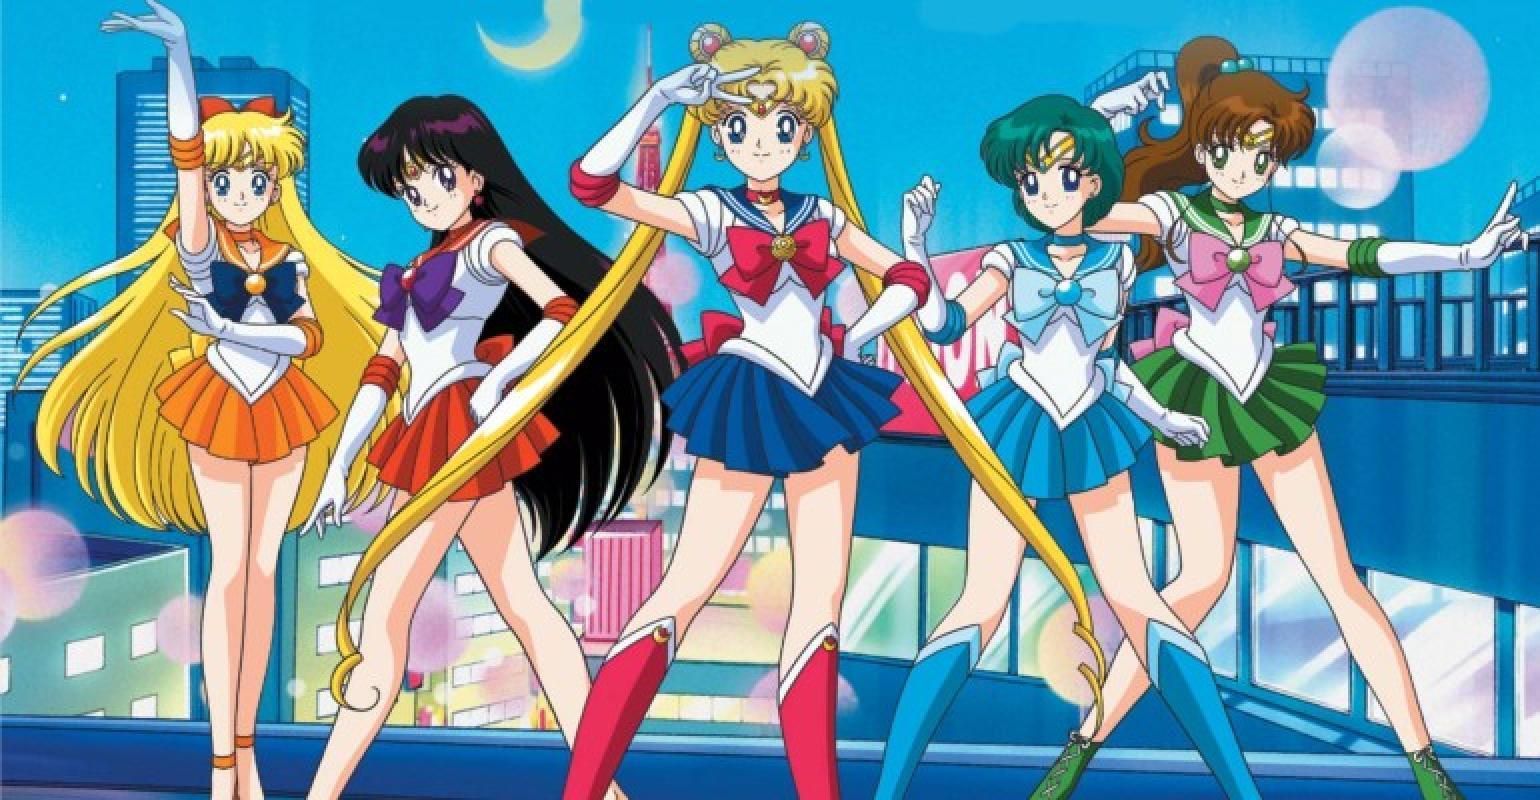 Famous Shoujo magic girl anime like Mysterious Thief Saint Tail, Sailor Moon